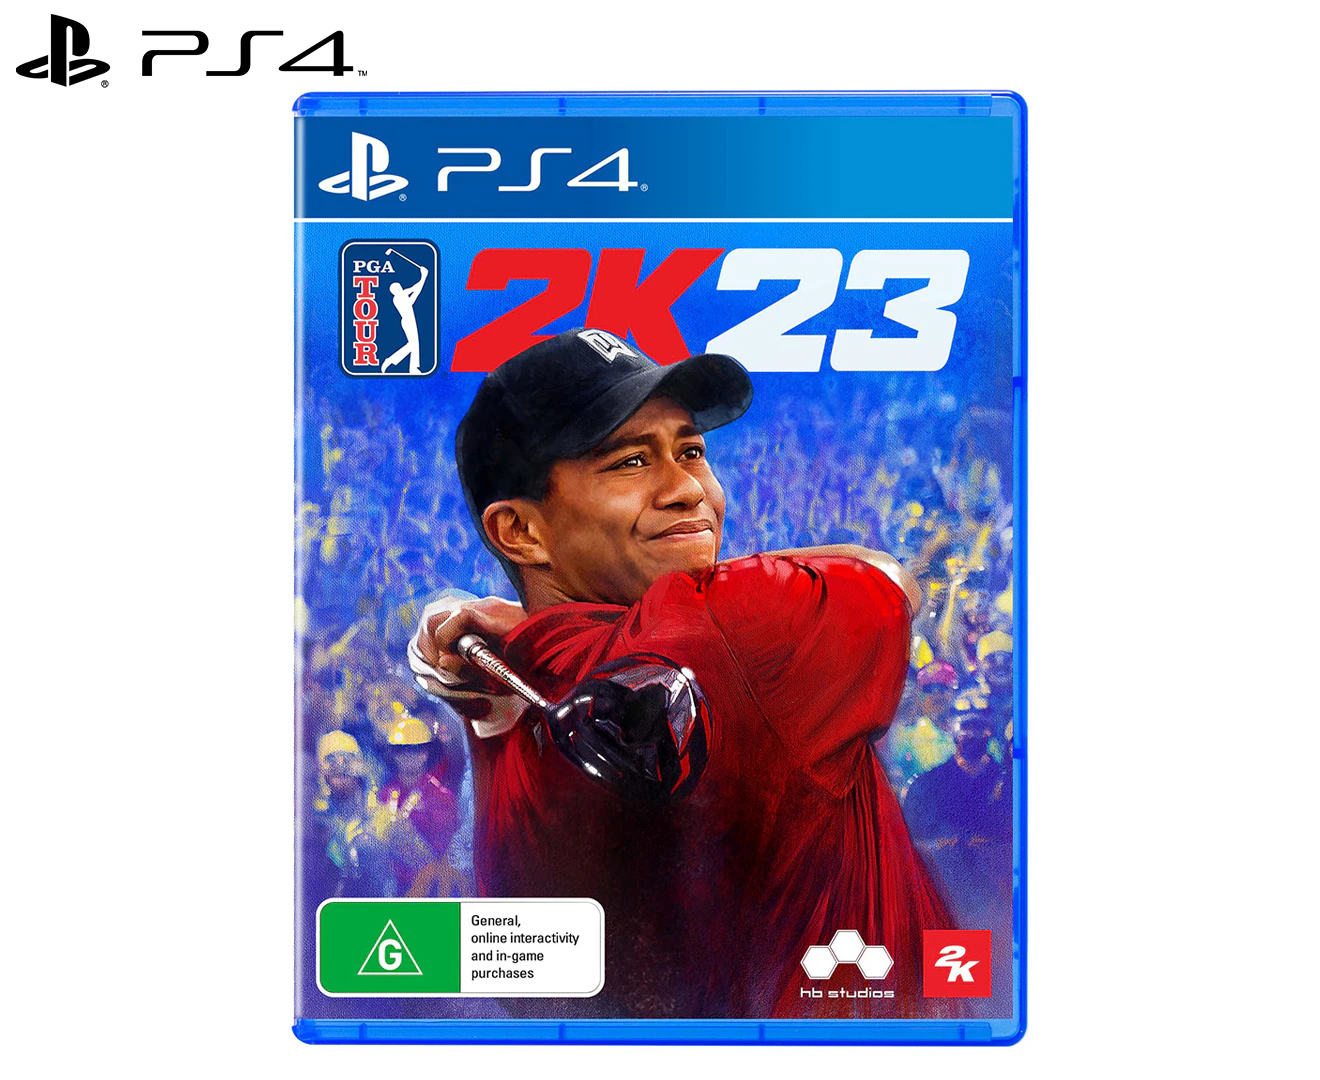 PlayStation 5 PGA Tour Game 2K23